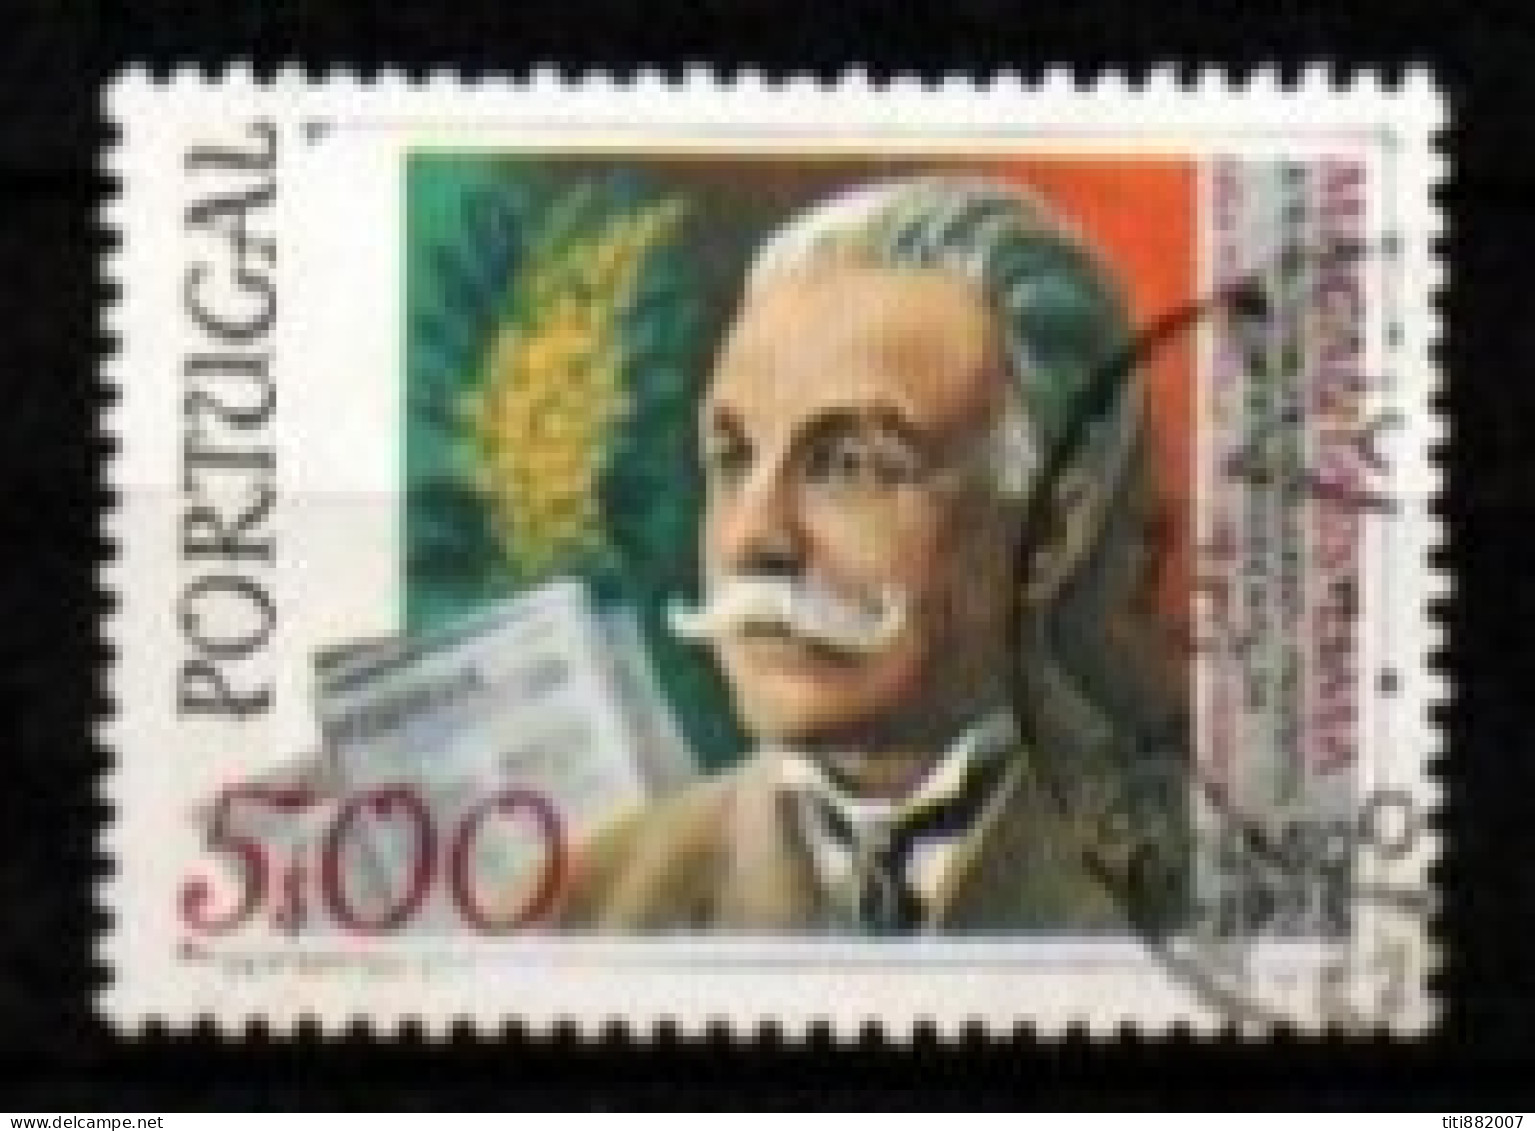 PORTUGAL    -   1978.    Y&T N° 1403 Oblitéré  .  Magalhaes Lima,  Journaliste. - Used Stamps